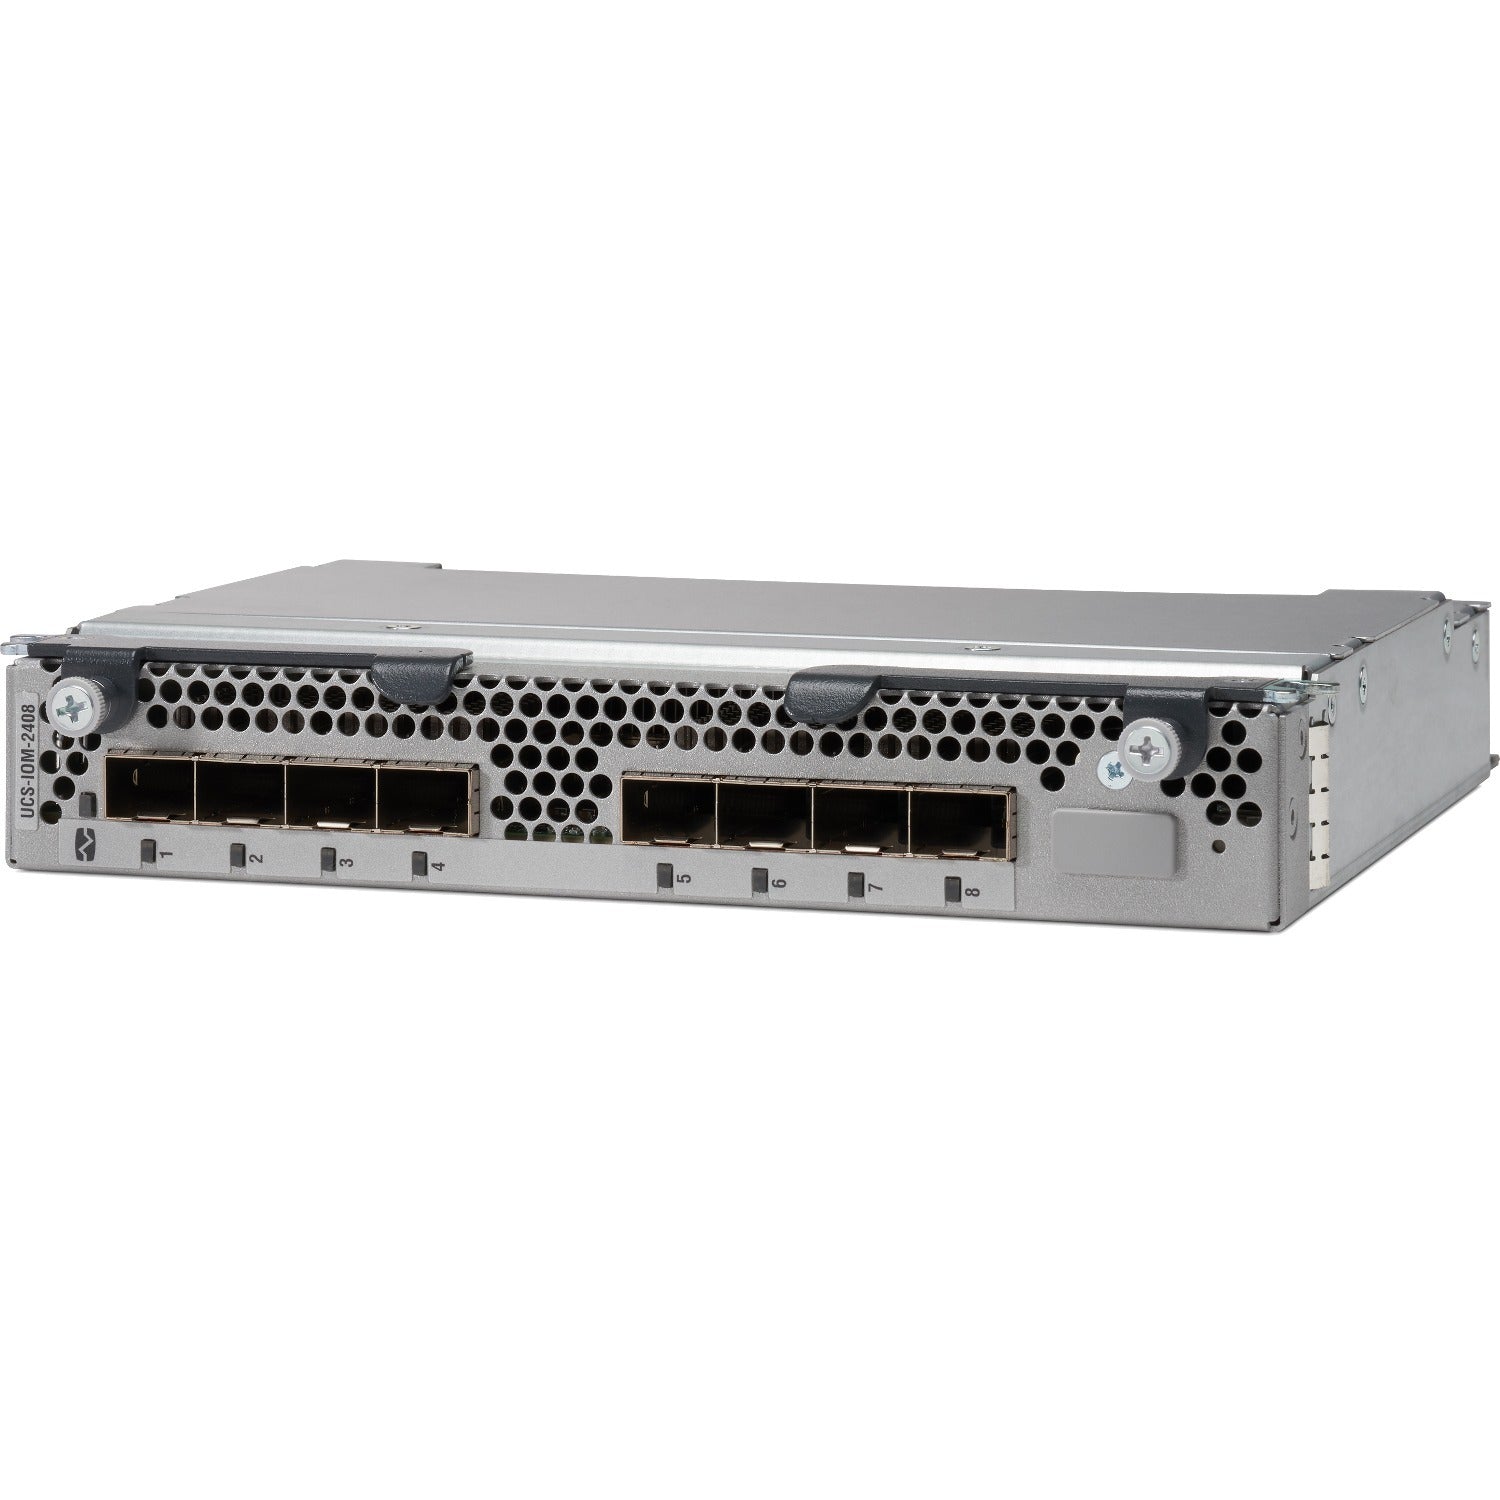 Cisco IOM 2408 I/O Module (8 external 25G ports, 32 internal 10G ports) - UCS-IOM-2408